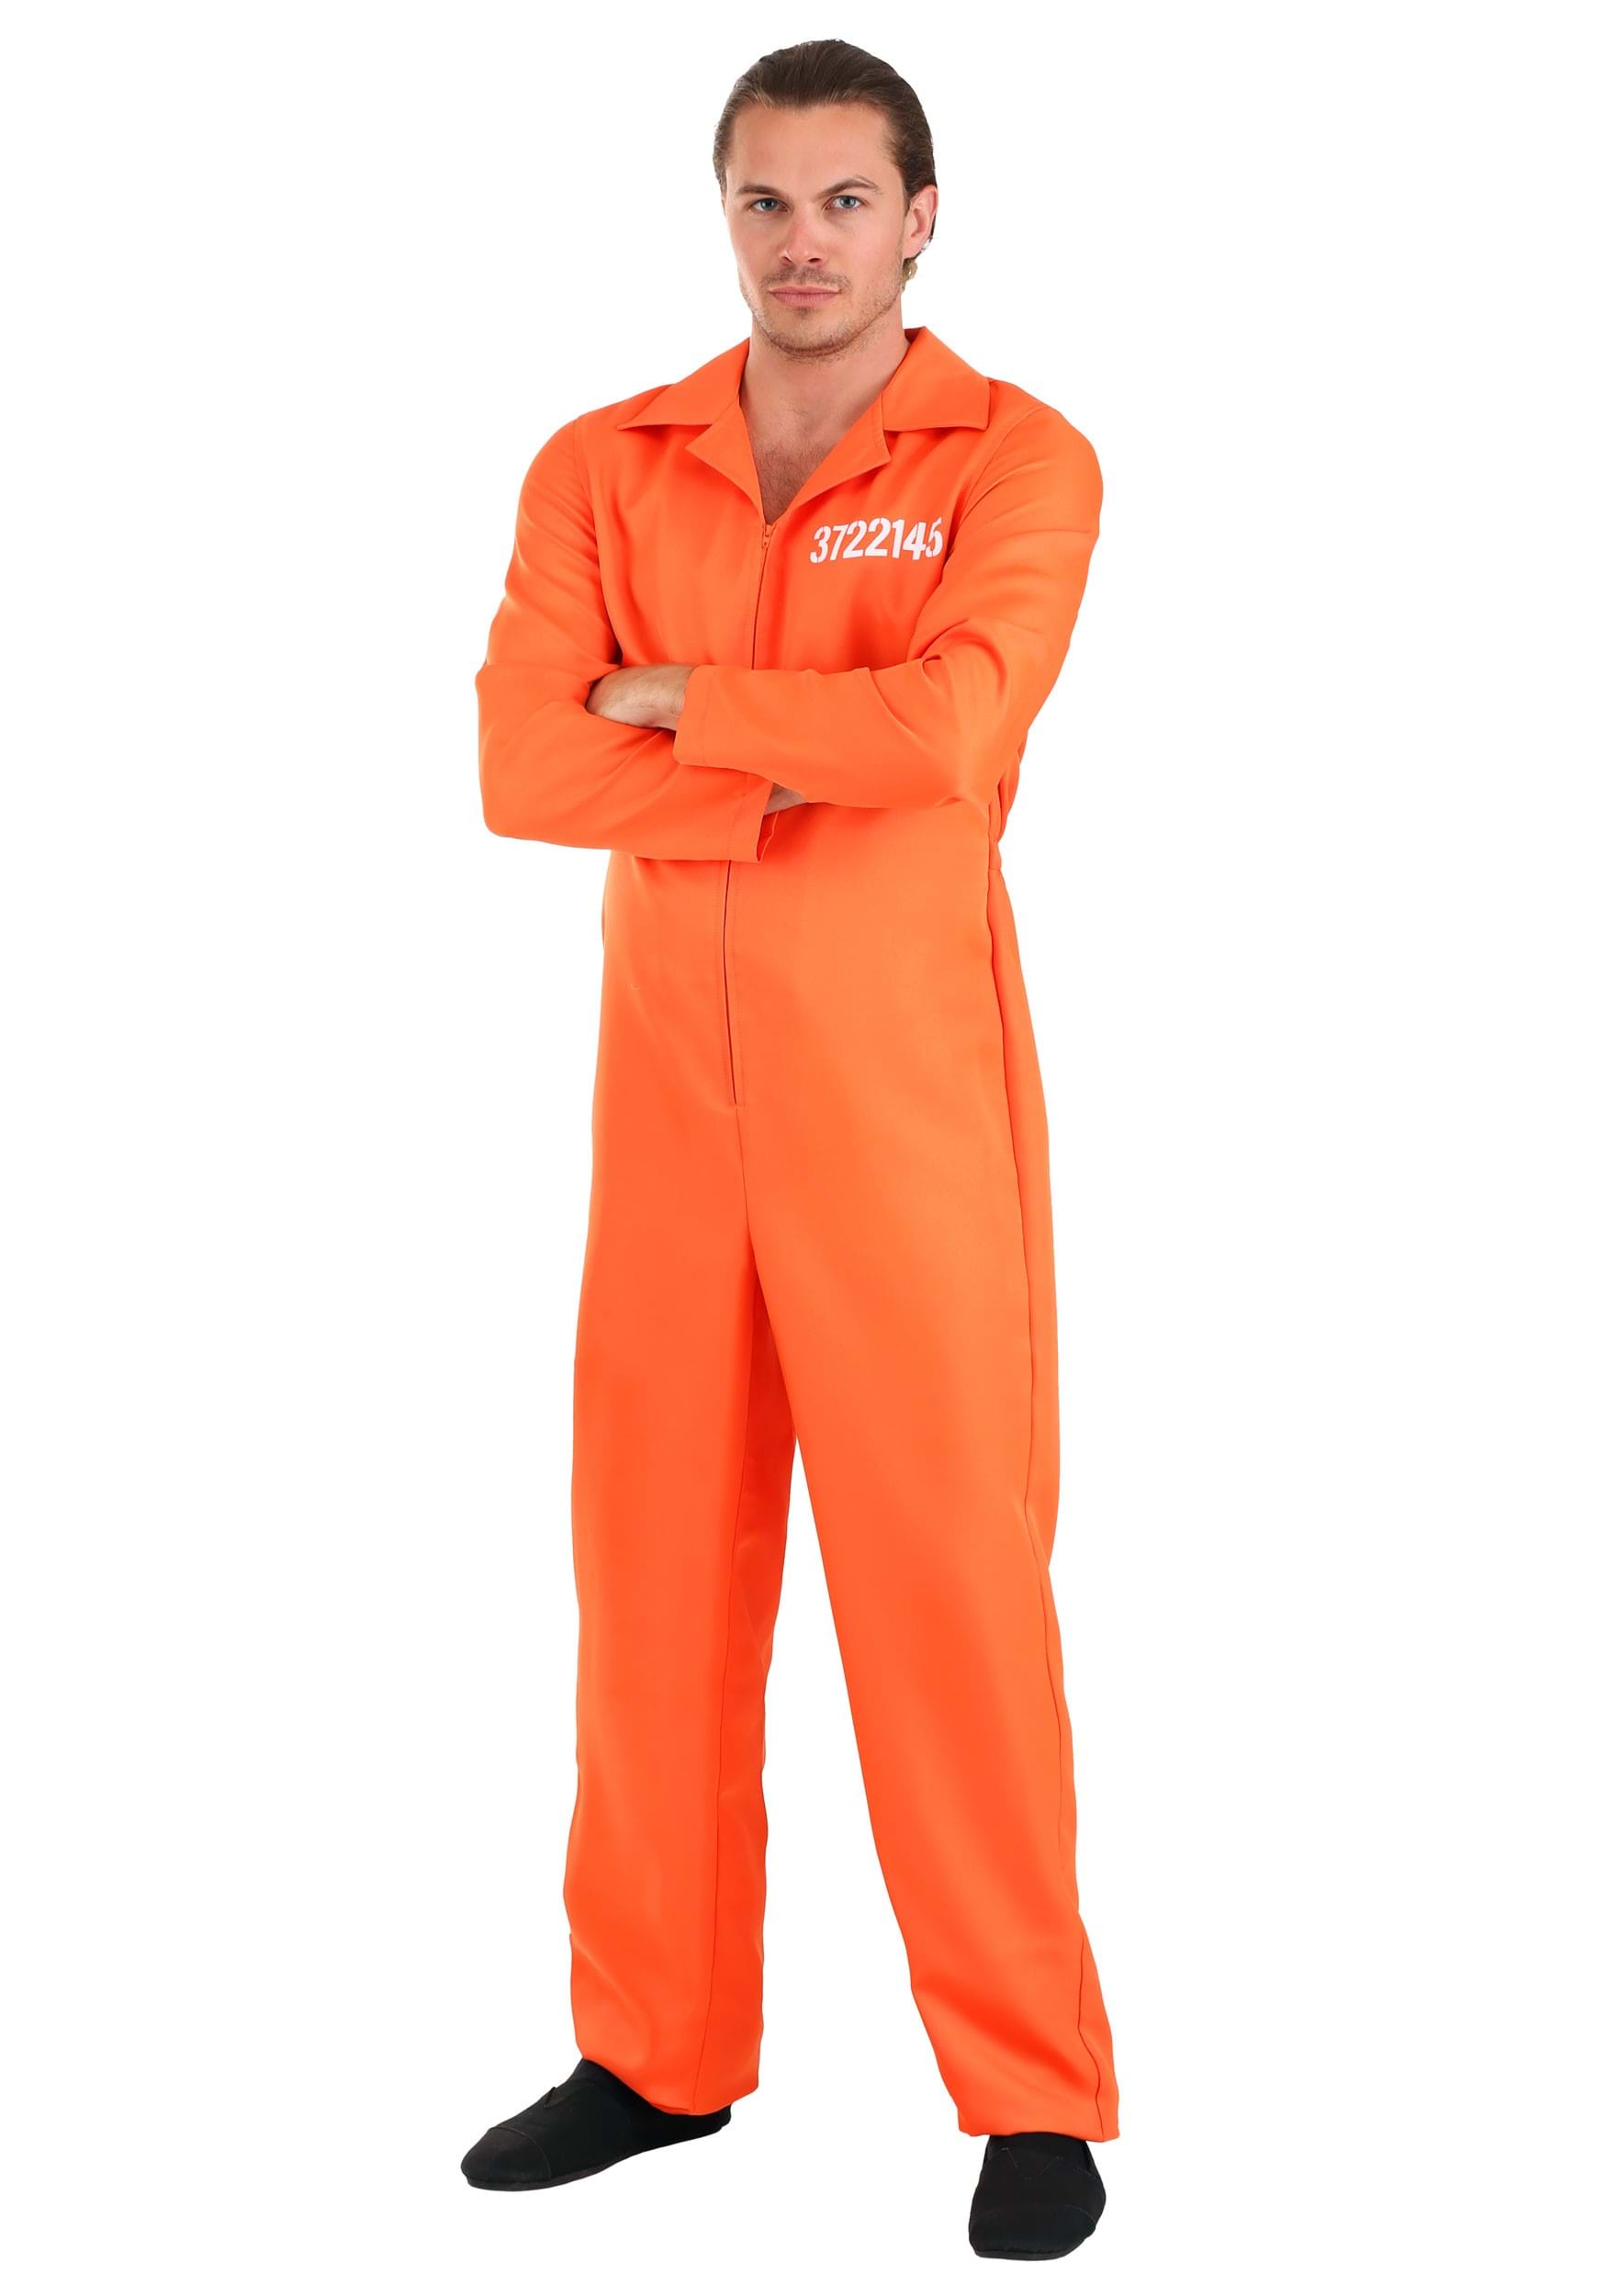 https://images.halloween.com/products/45203/1-1/mens-prison-orange-jumpsuit.jpg